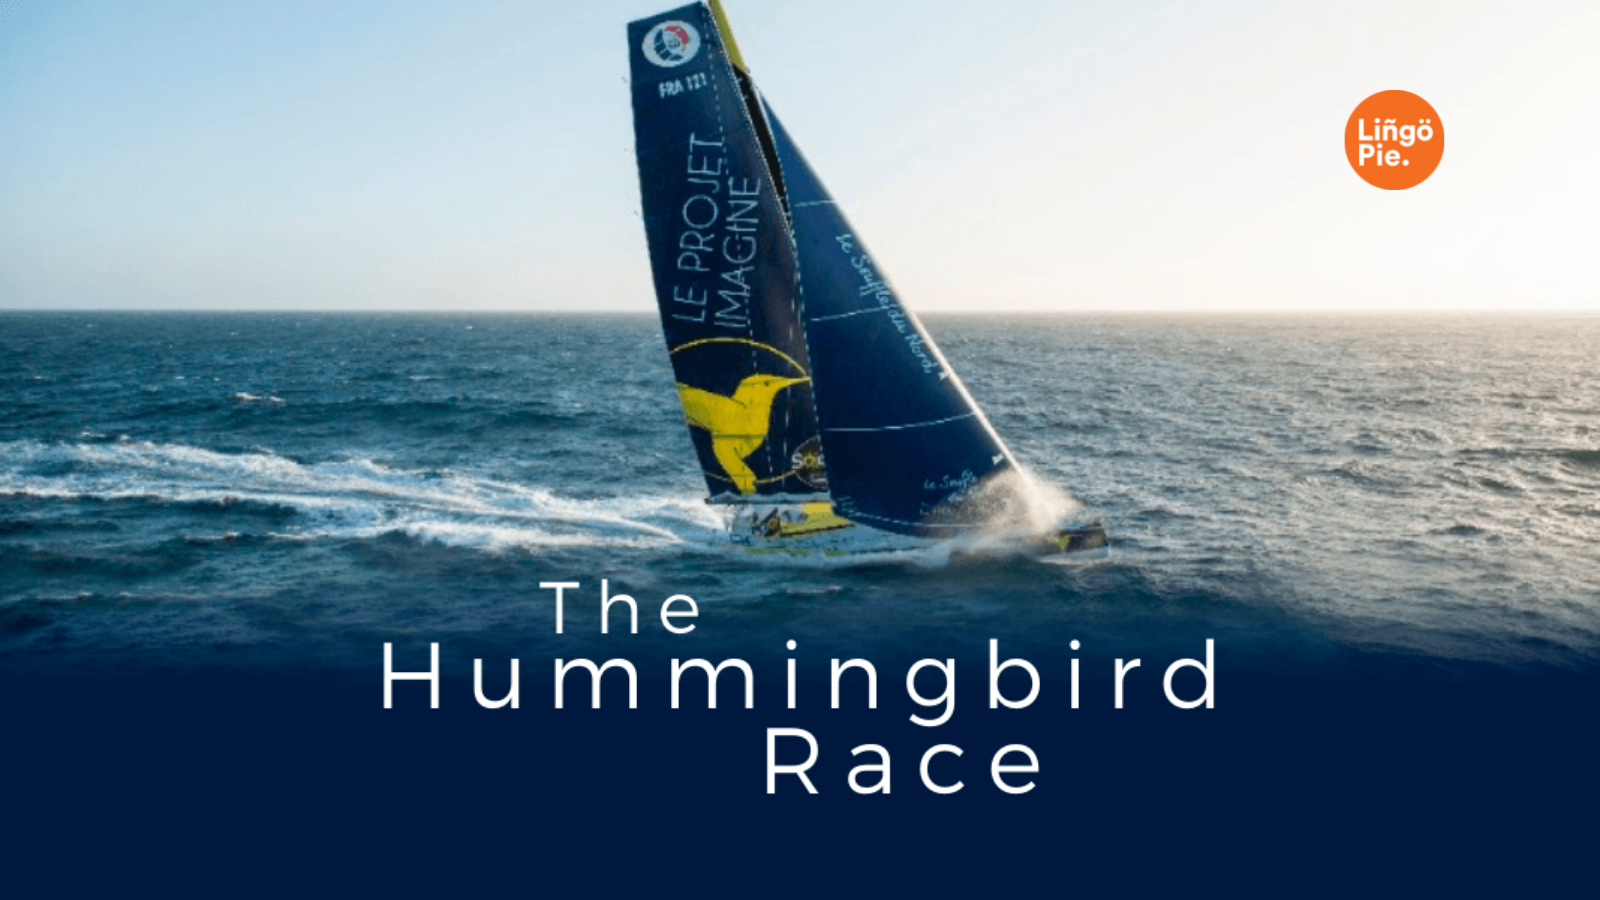 The Hummingbird Race on Lingopie